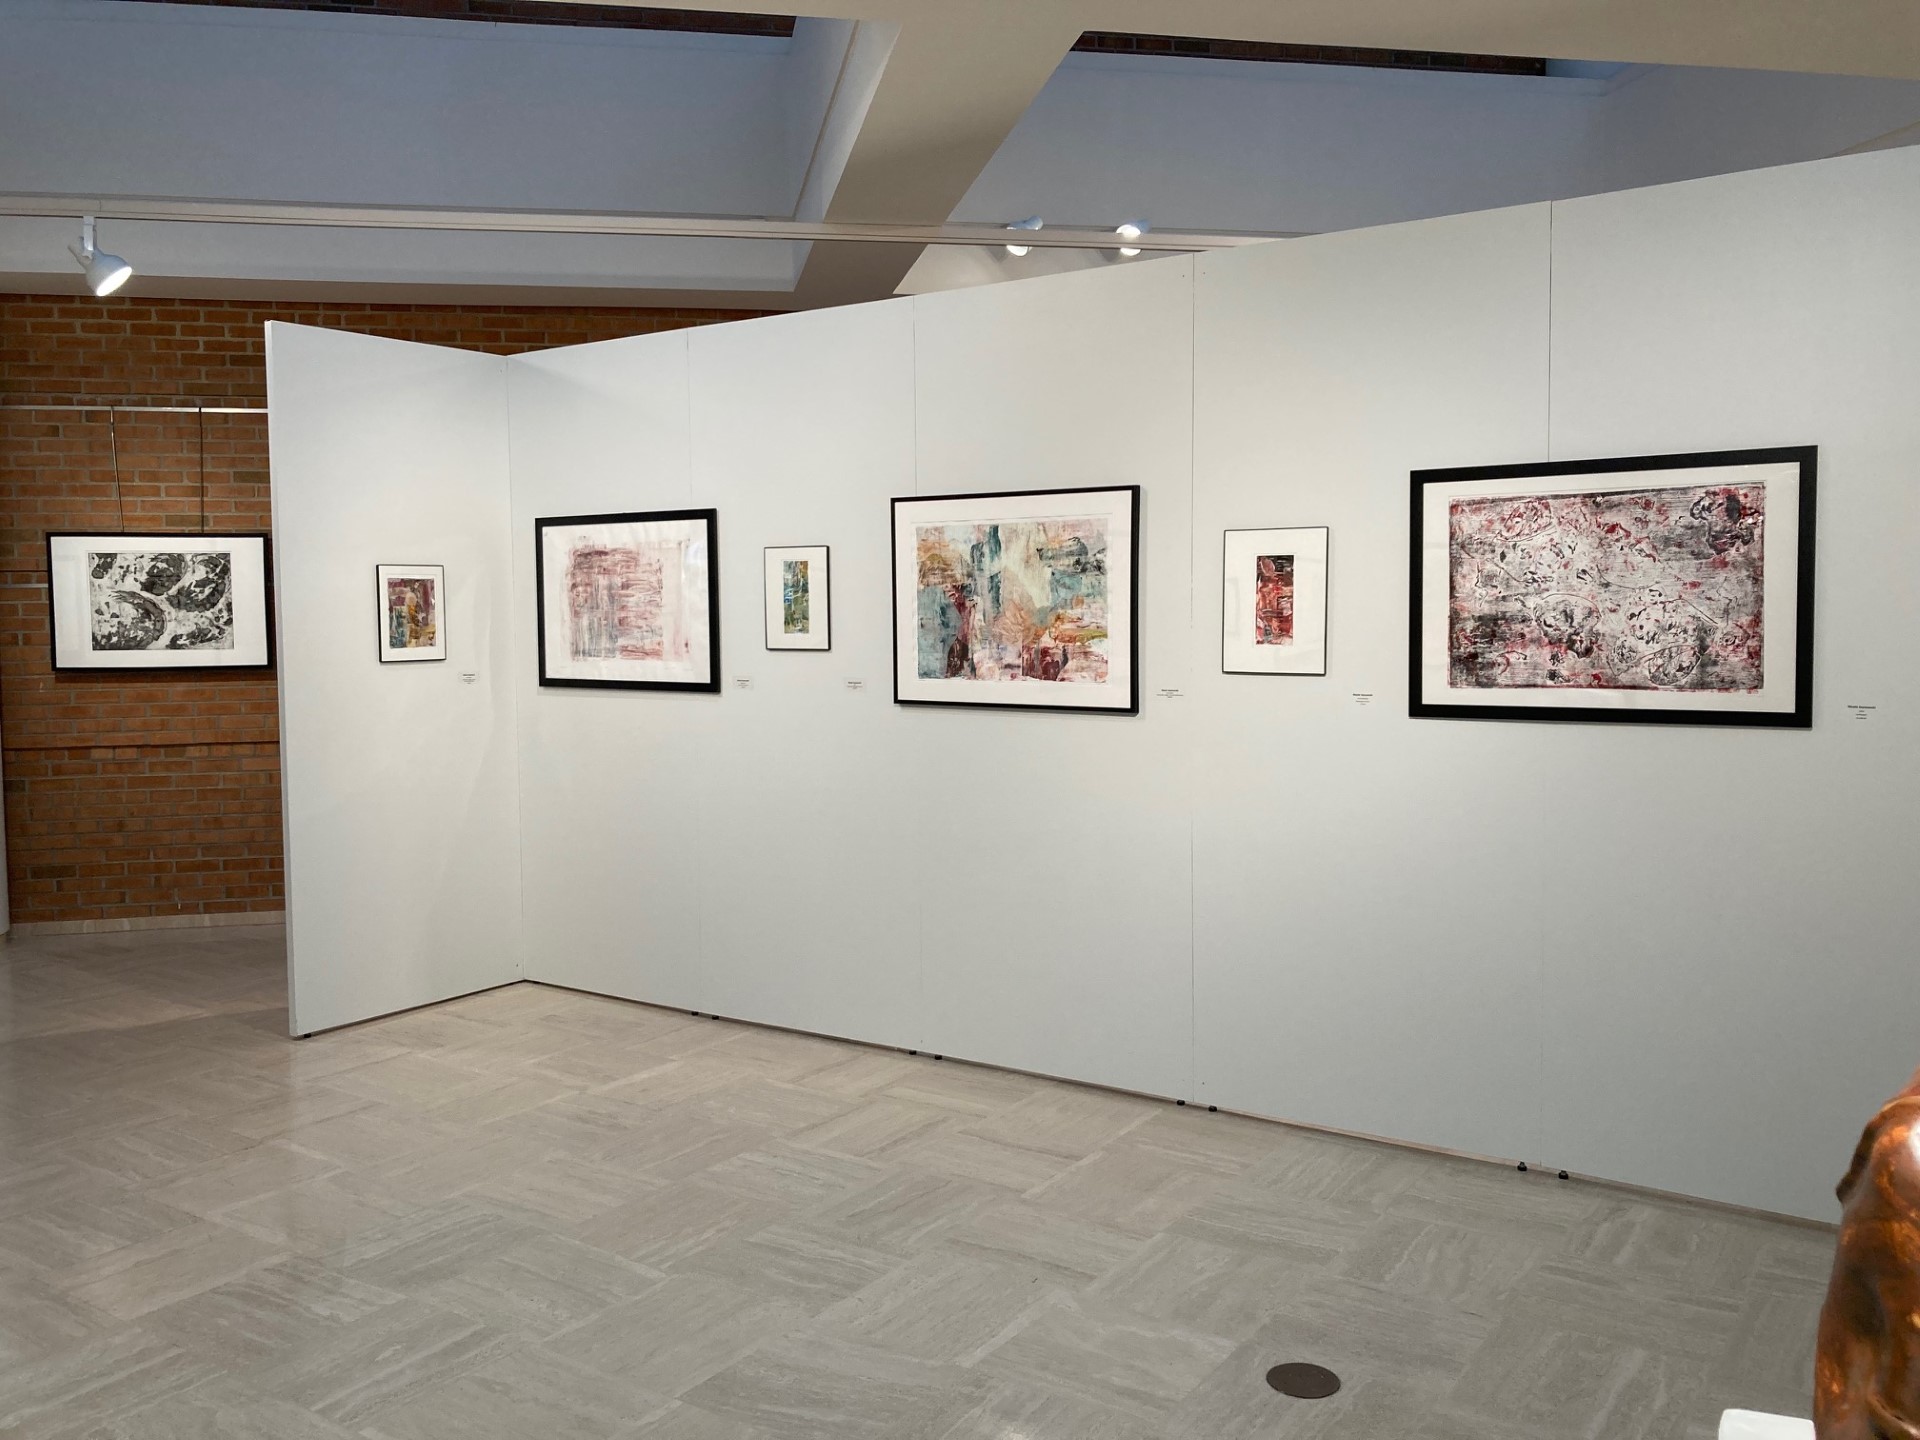 Syzmanski works on paper center of gallery